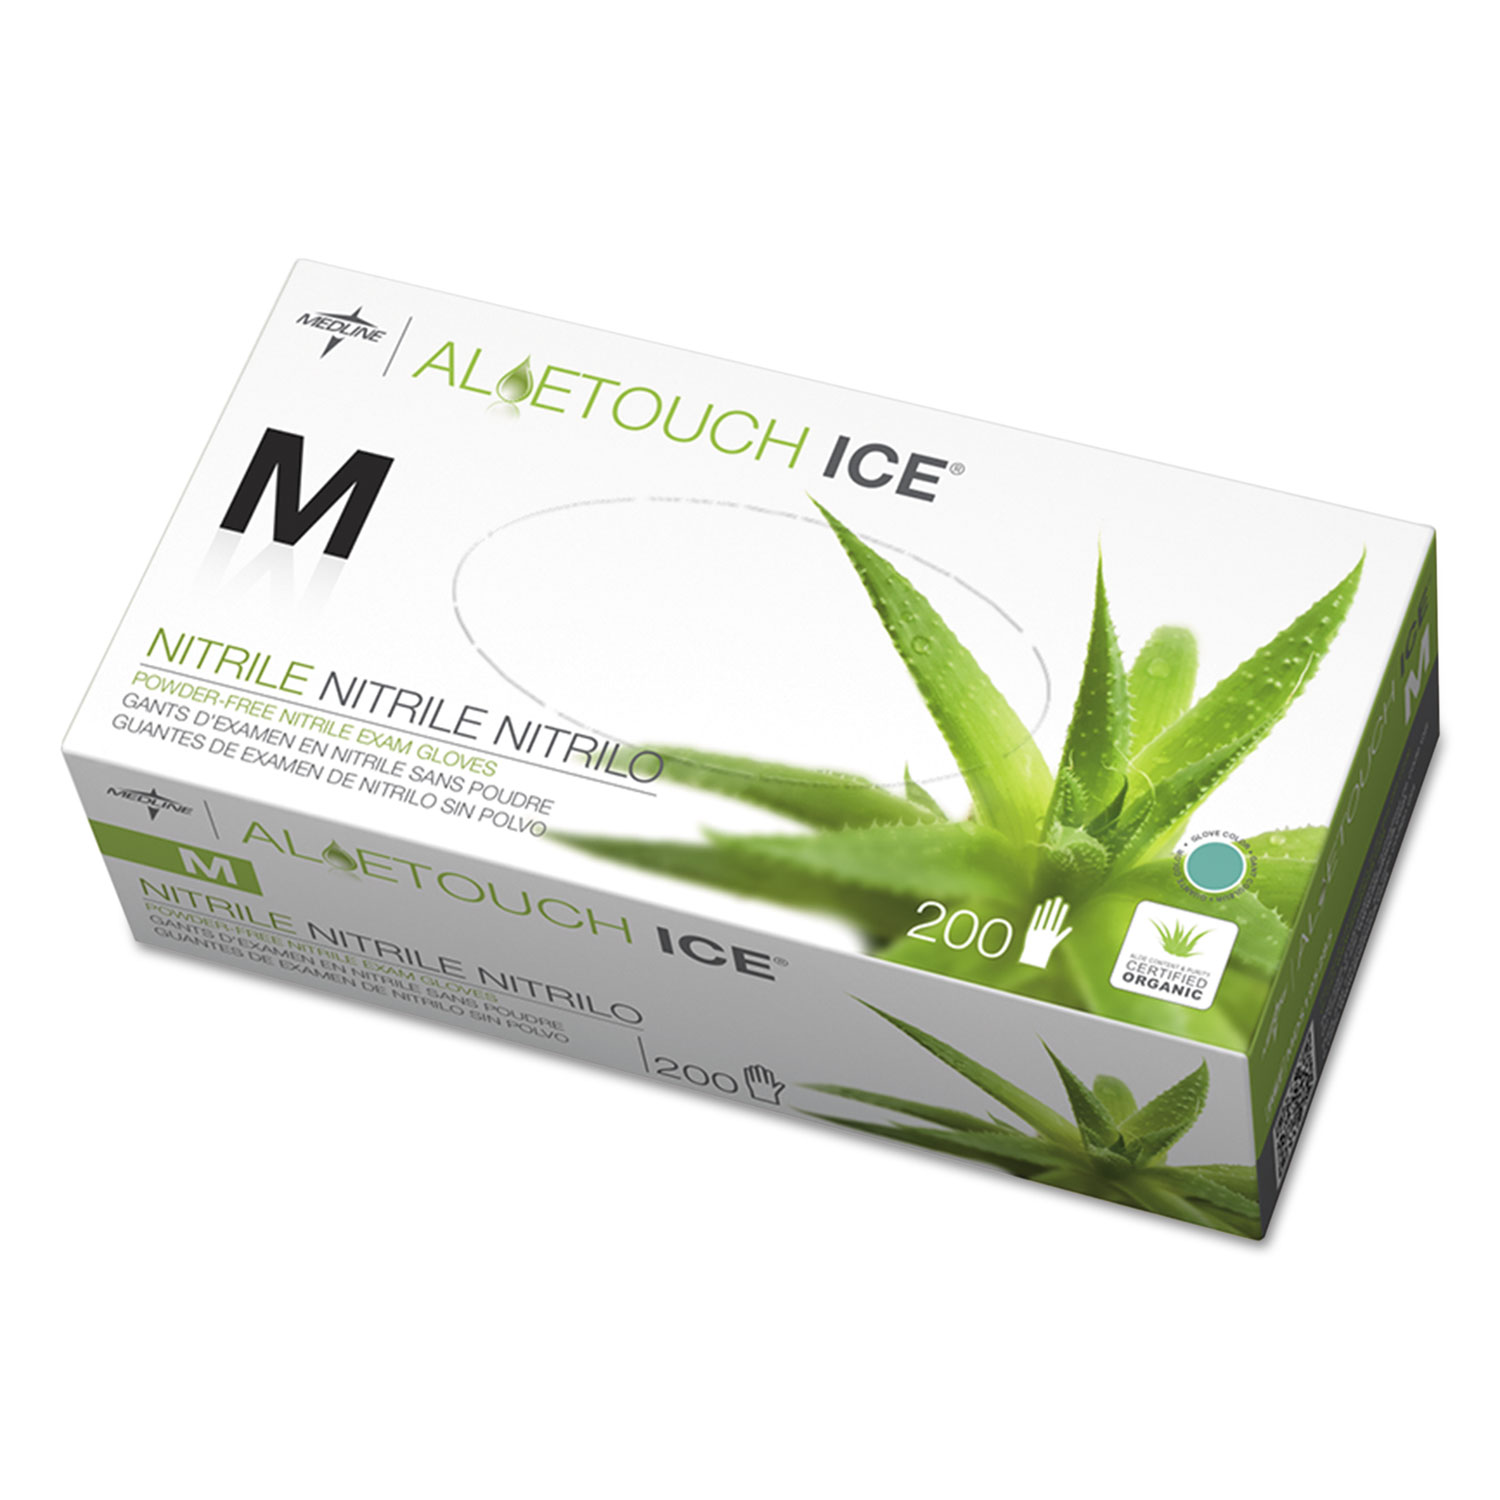  Medline MDS195285 Aloetouch Ice Nitrile Exam Gloves, Medium, Green, 200/Box (MIIMDS195285) 